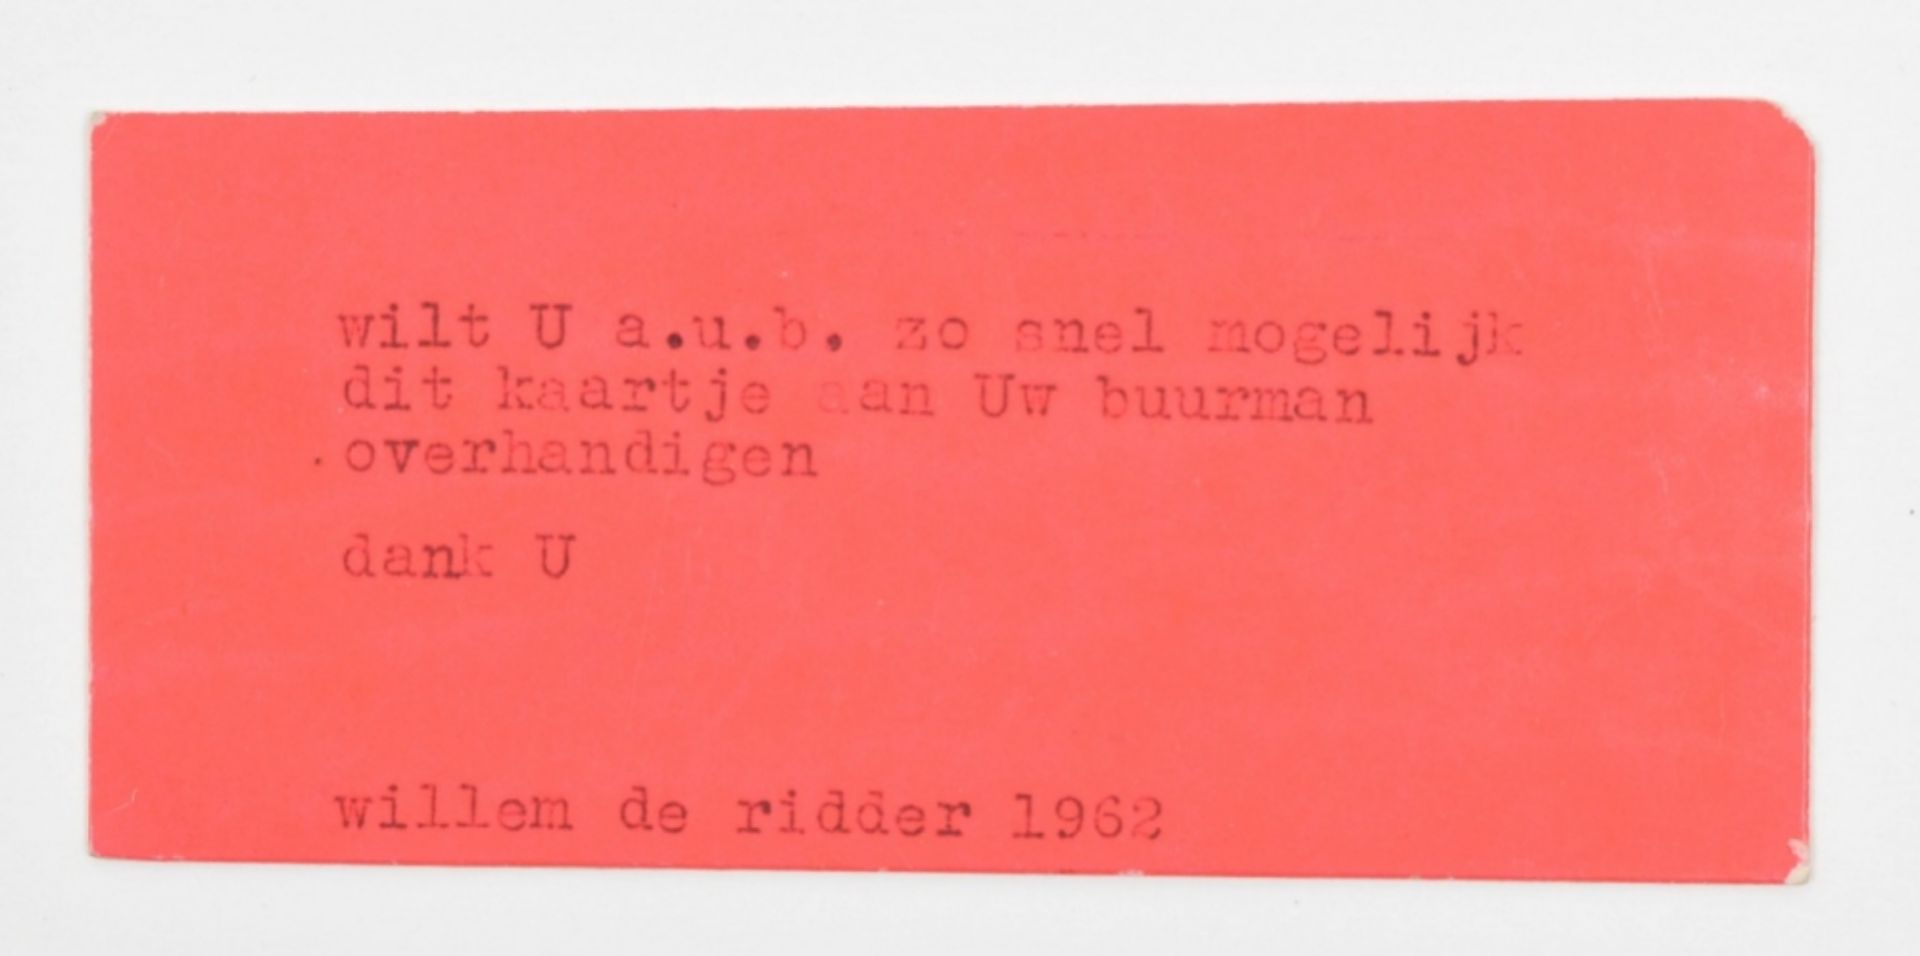 Willem de Ridder, original event card and documents - Image 8 of 10